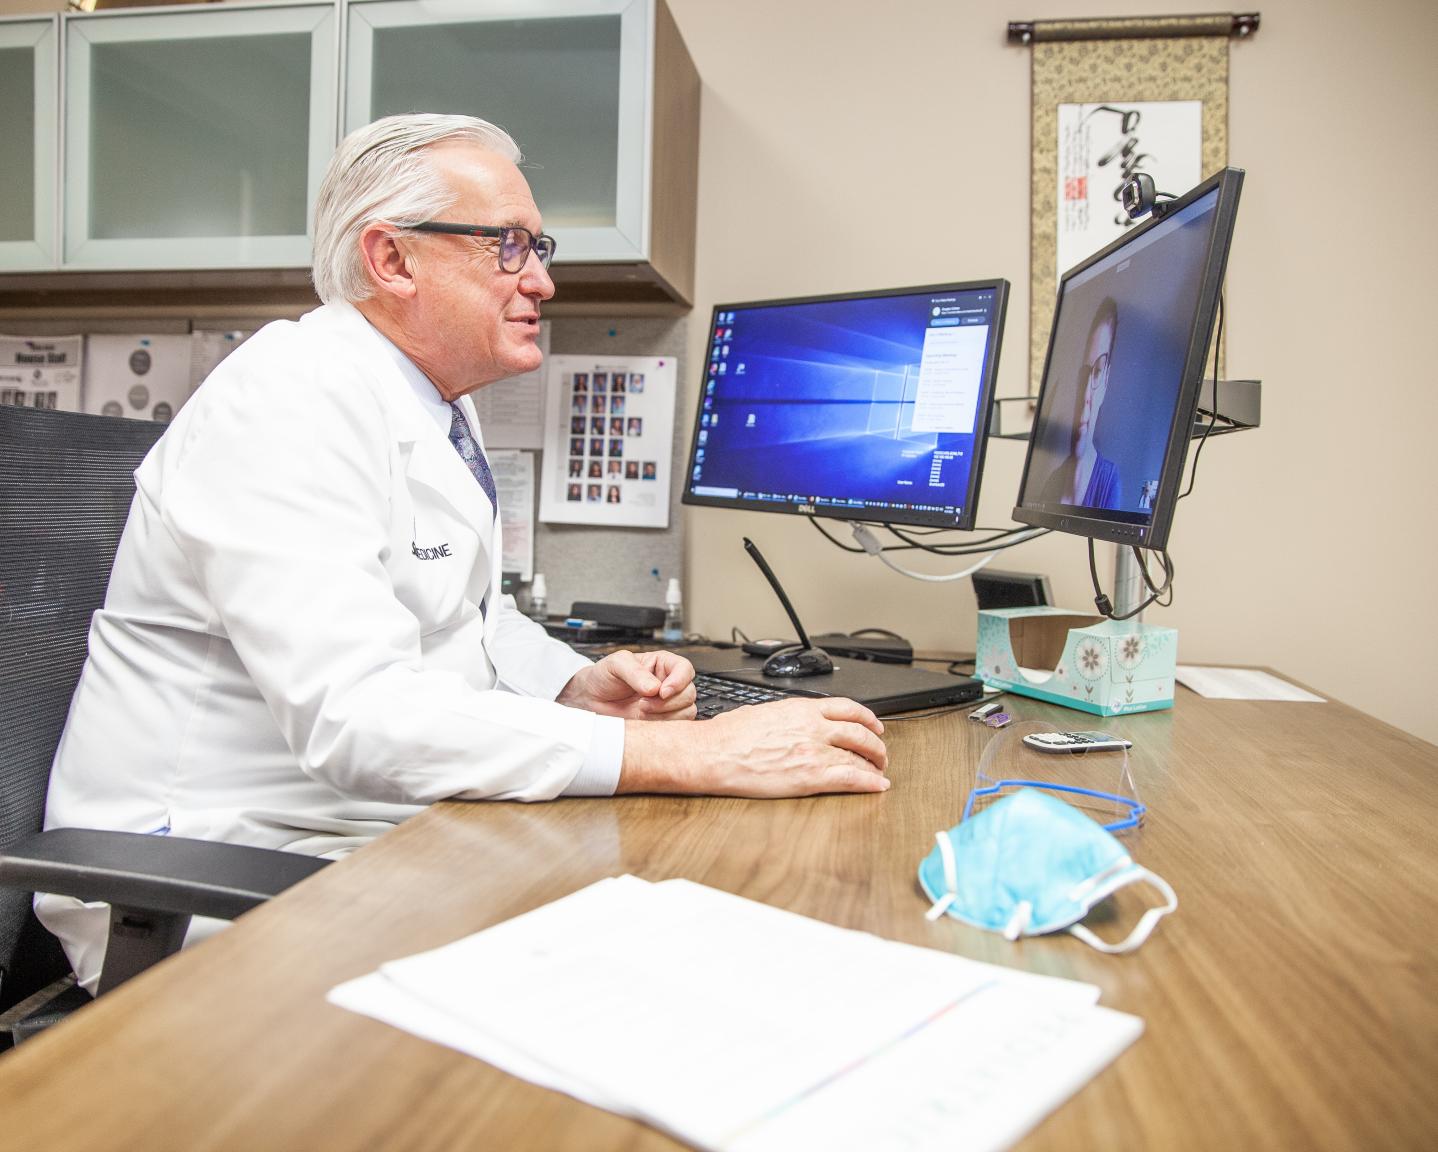 Dr. Carlson sees patient via telehealth